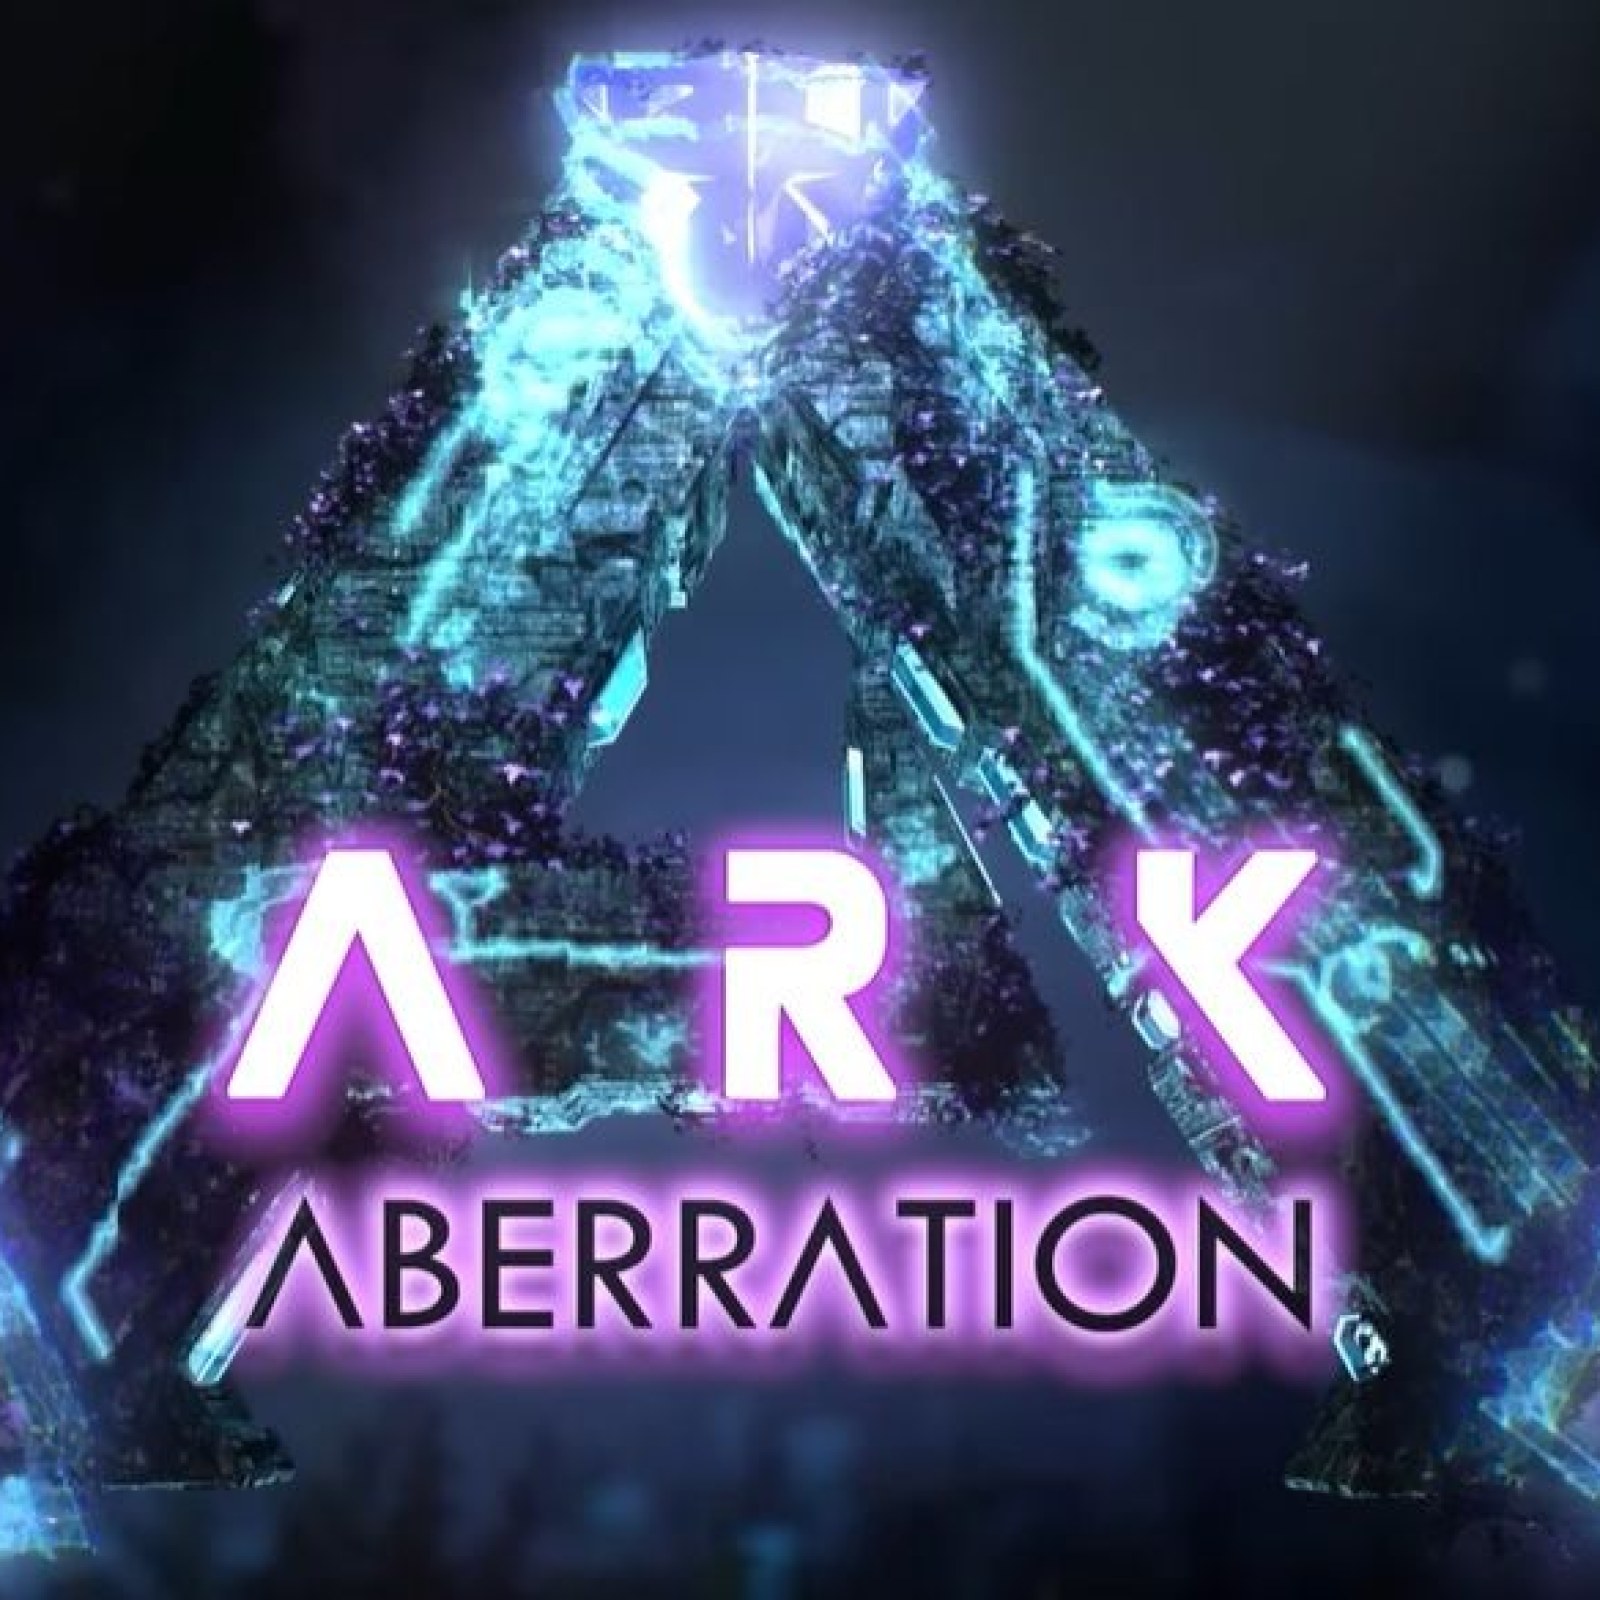 ARK: Ultimate Survivor Edition Switch Version gets update on DLC